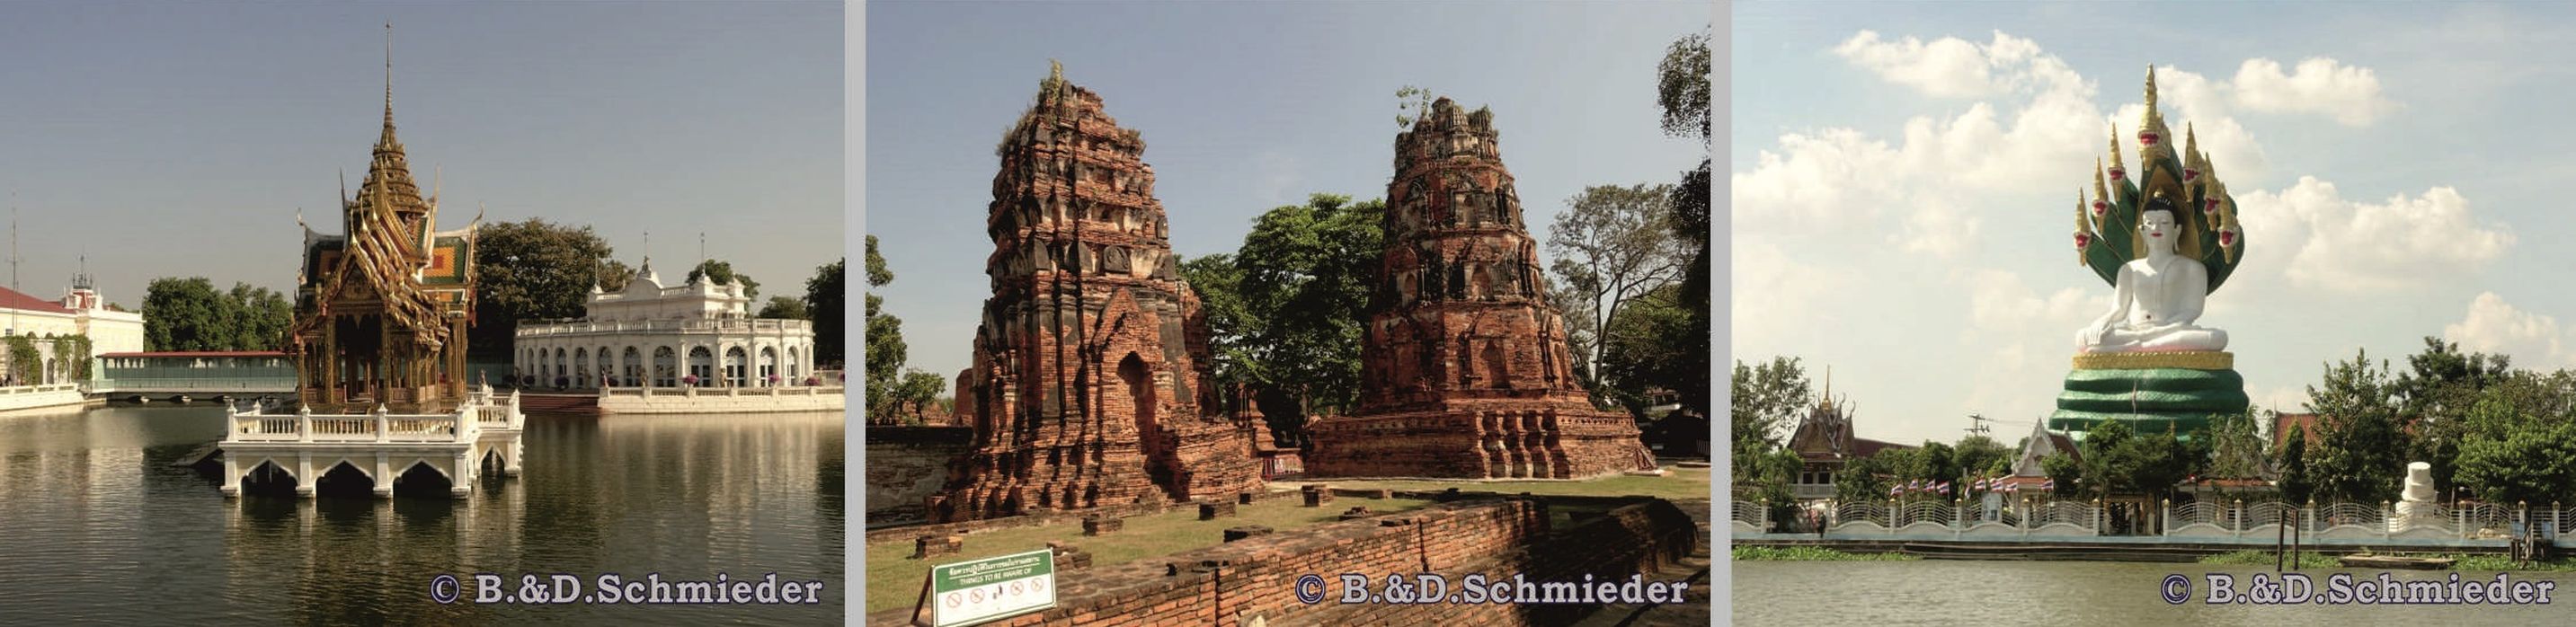 Sommerpalast Bang Pa-in (พระราชวังบางปะอิน) & Ayutthaya